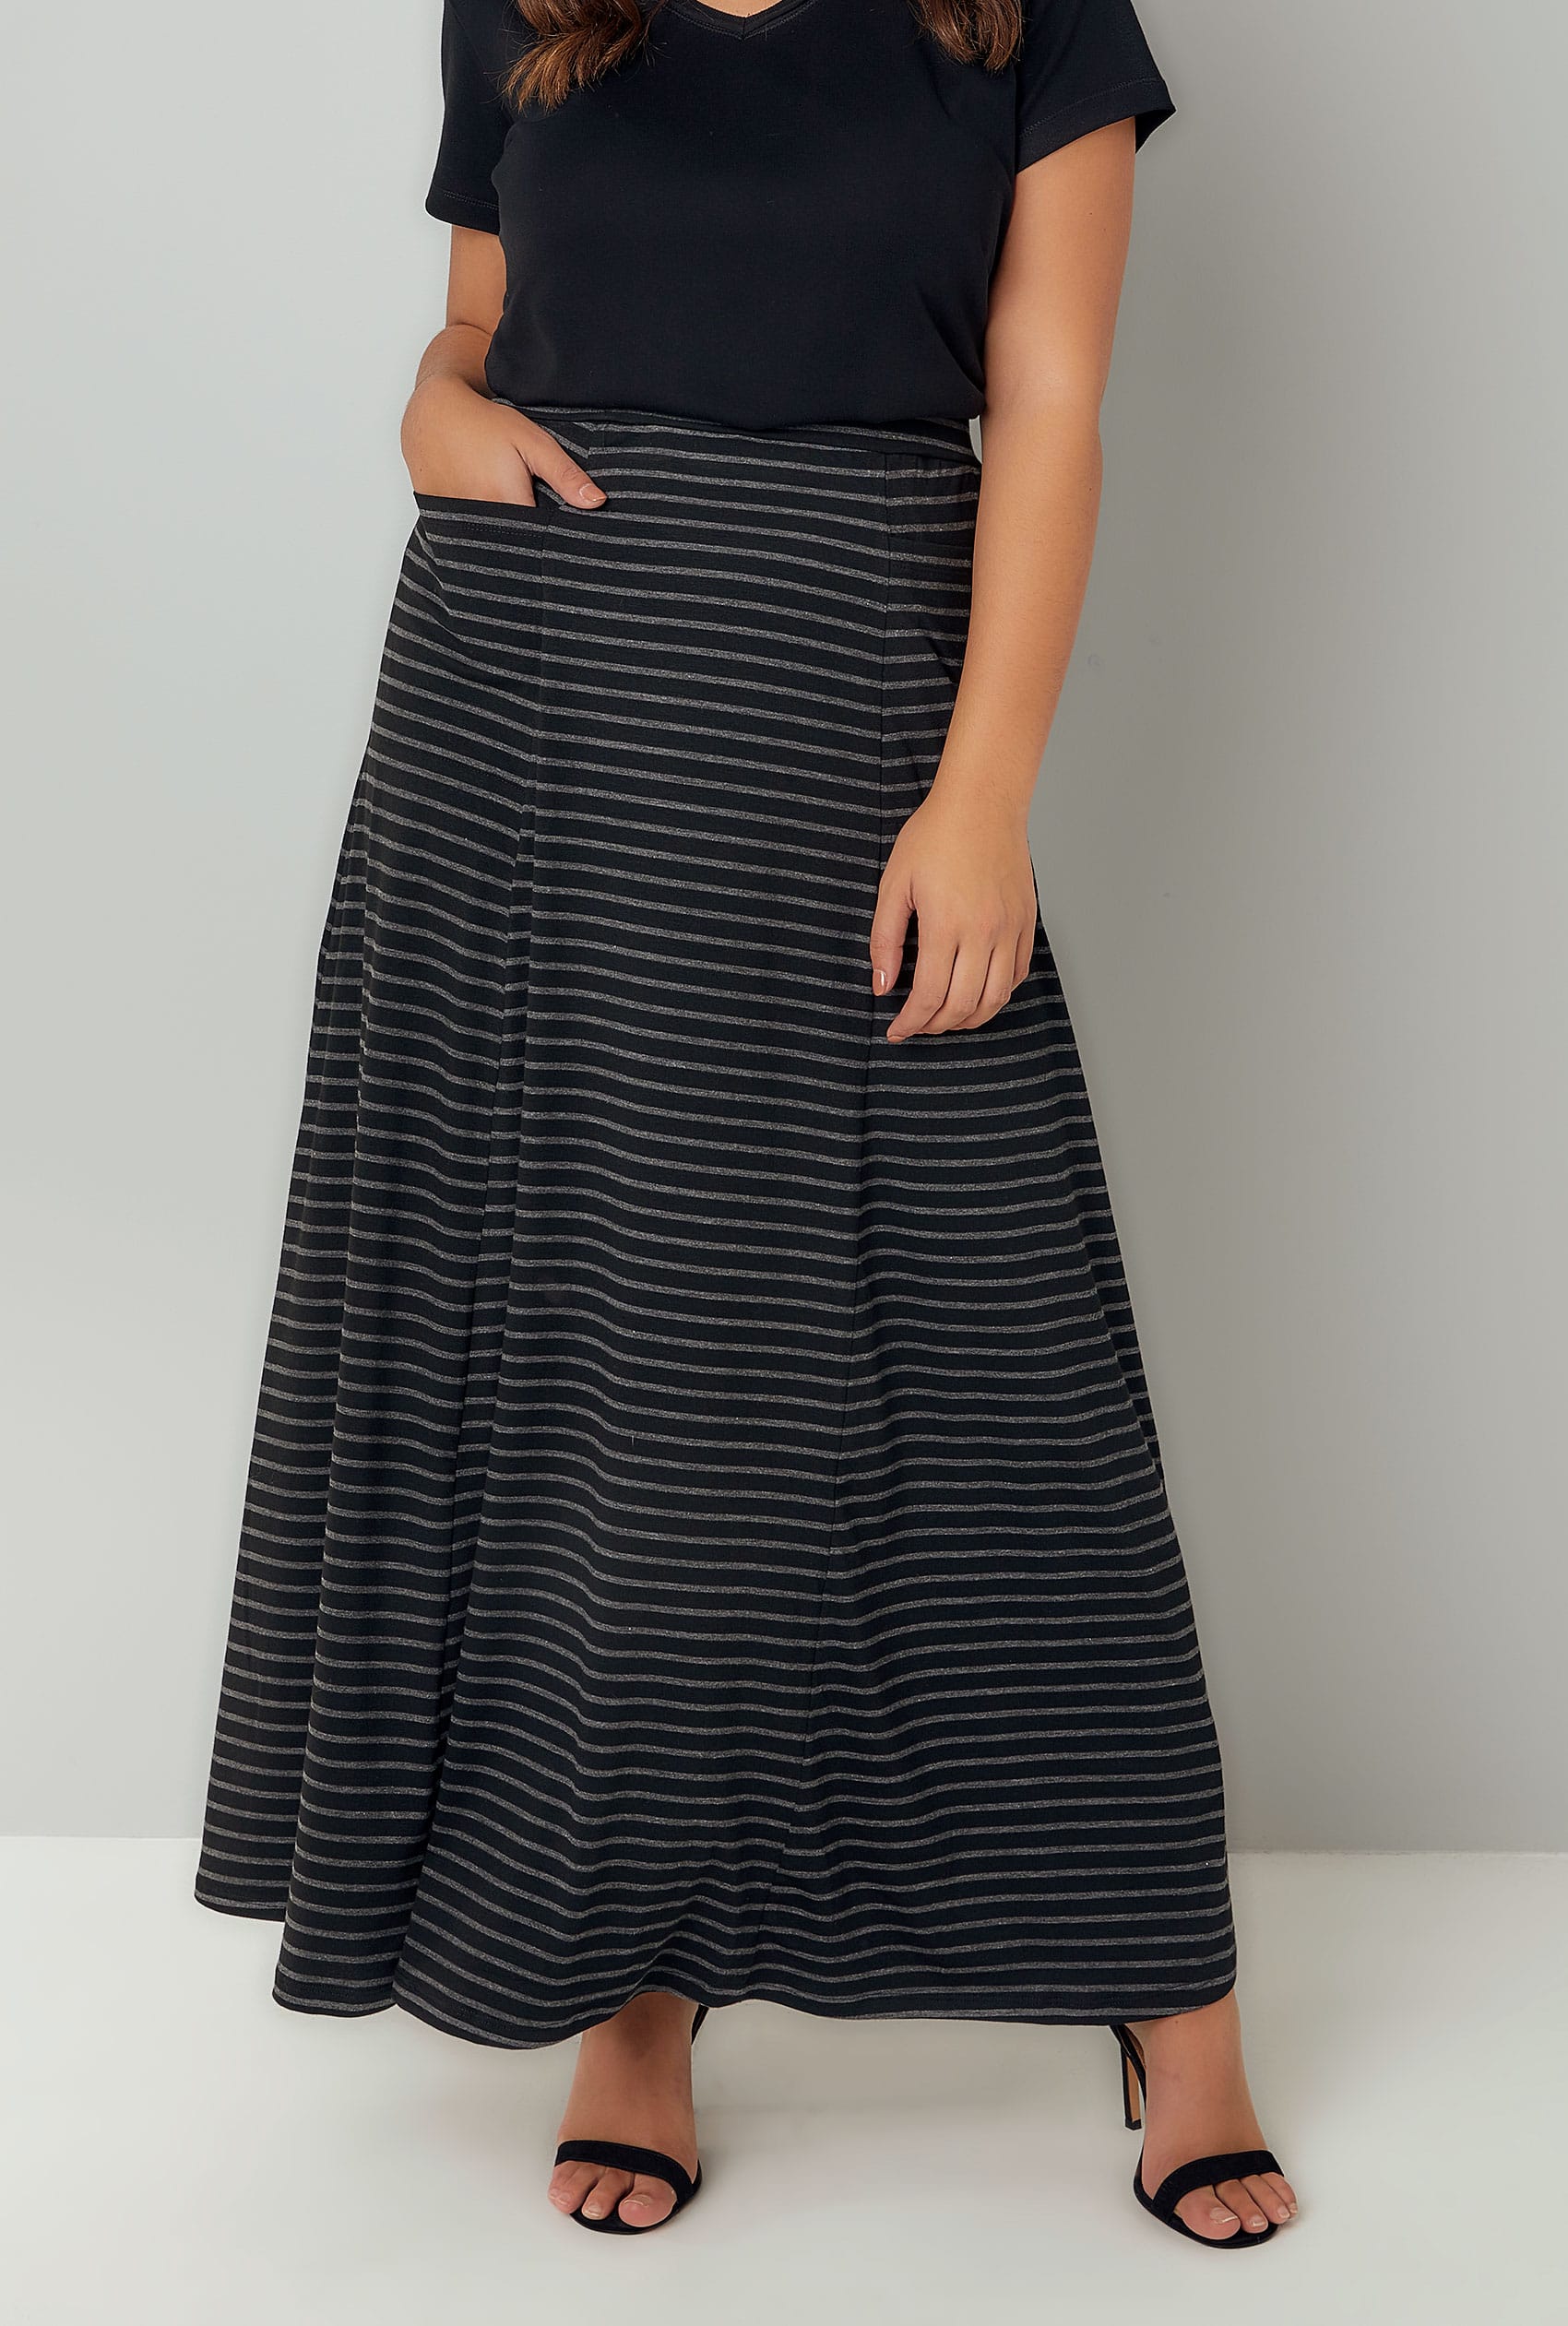 Black & Grey Stripe Maxi Skirt With Pockets, Plus size 16 to 36